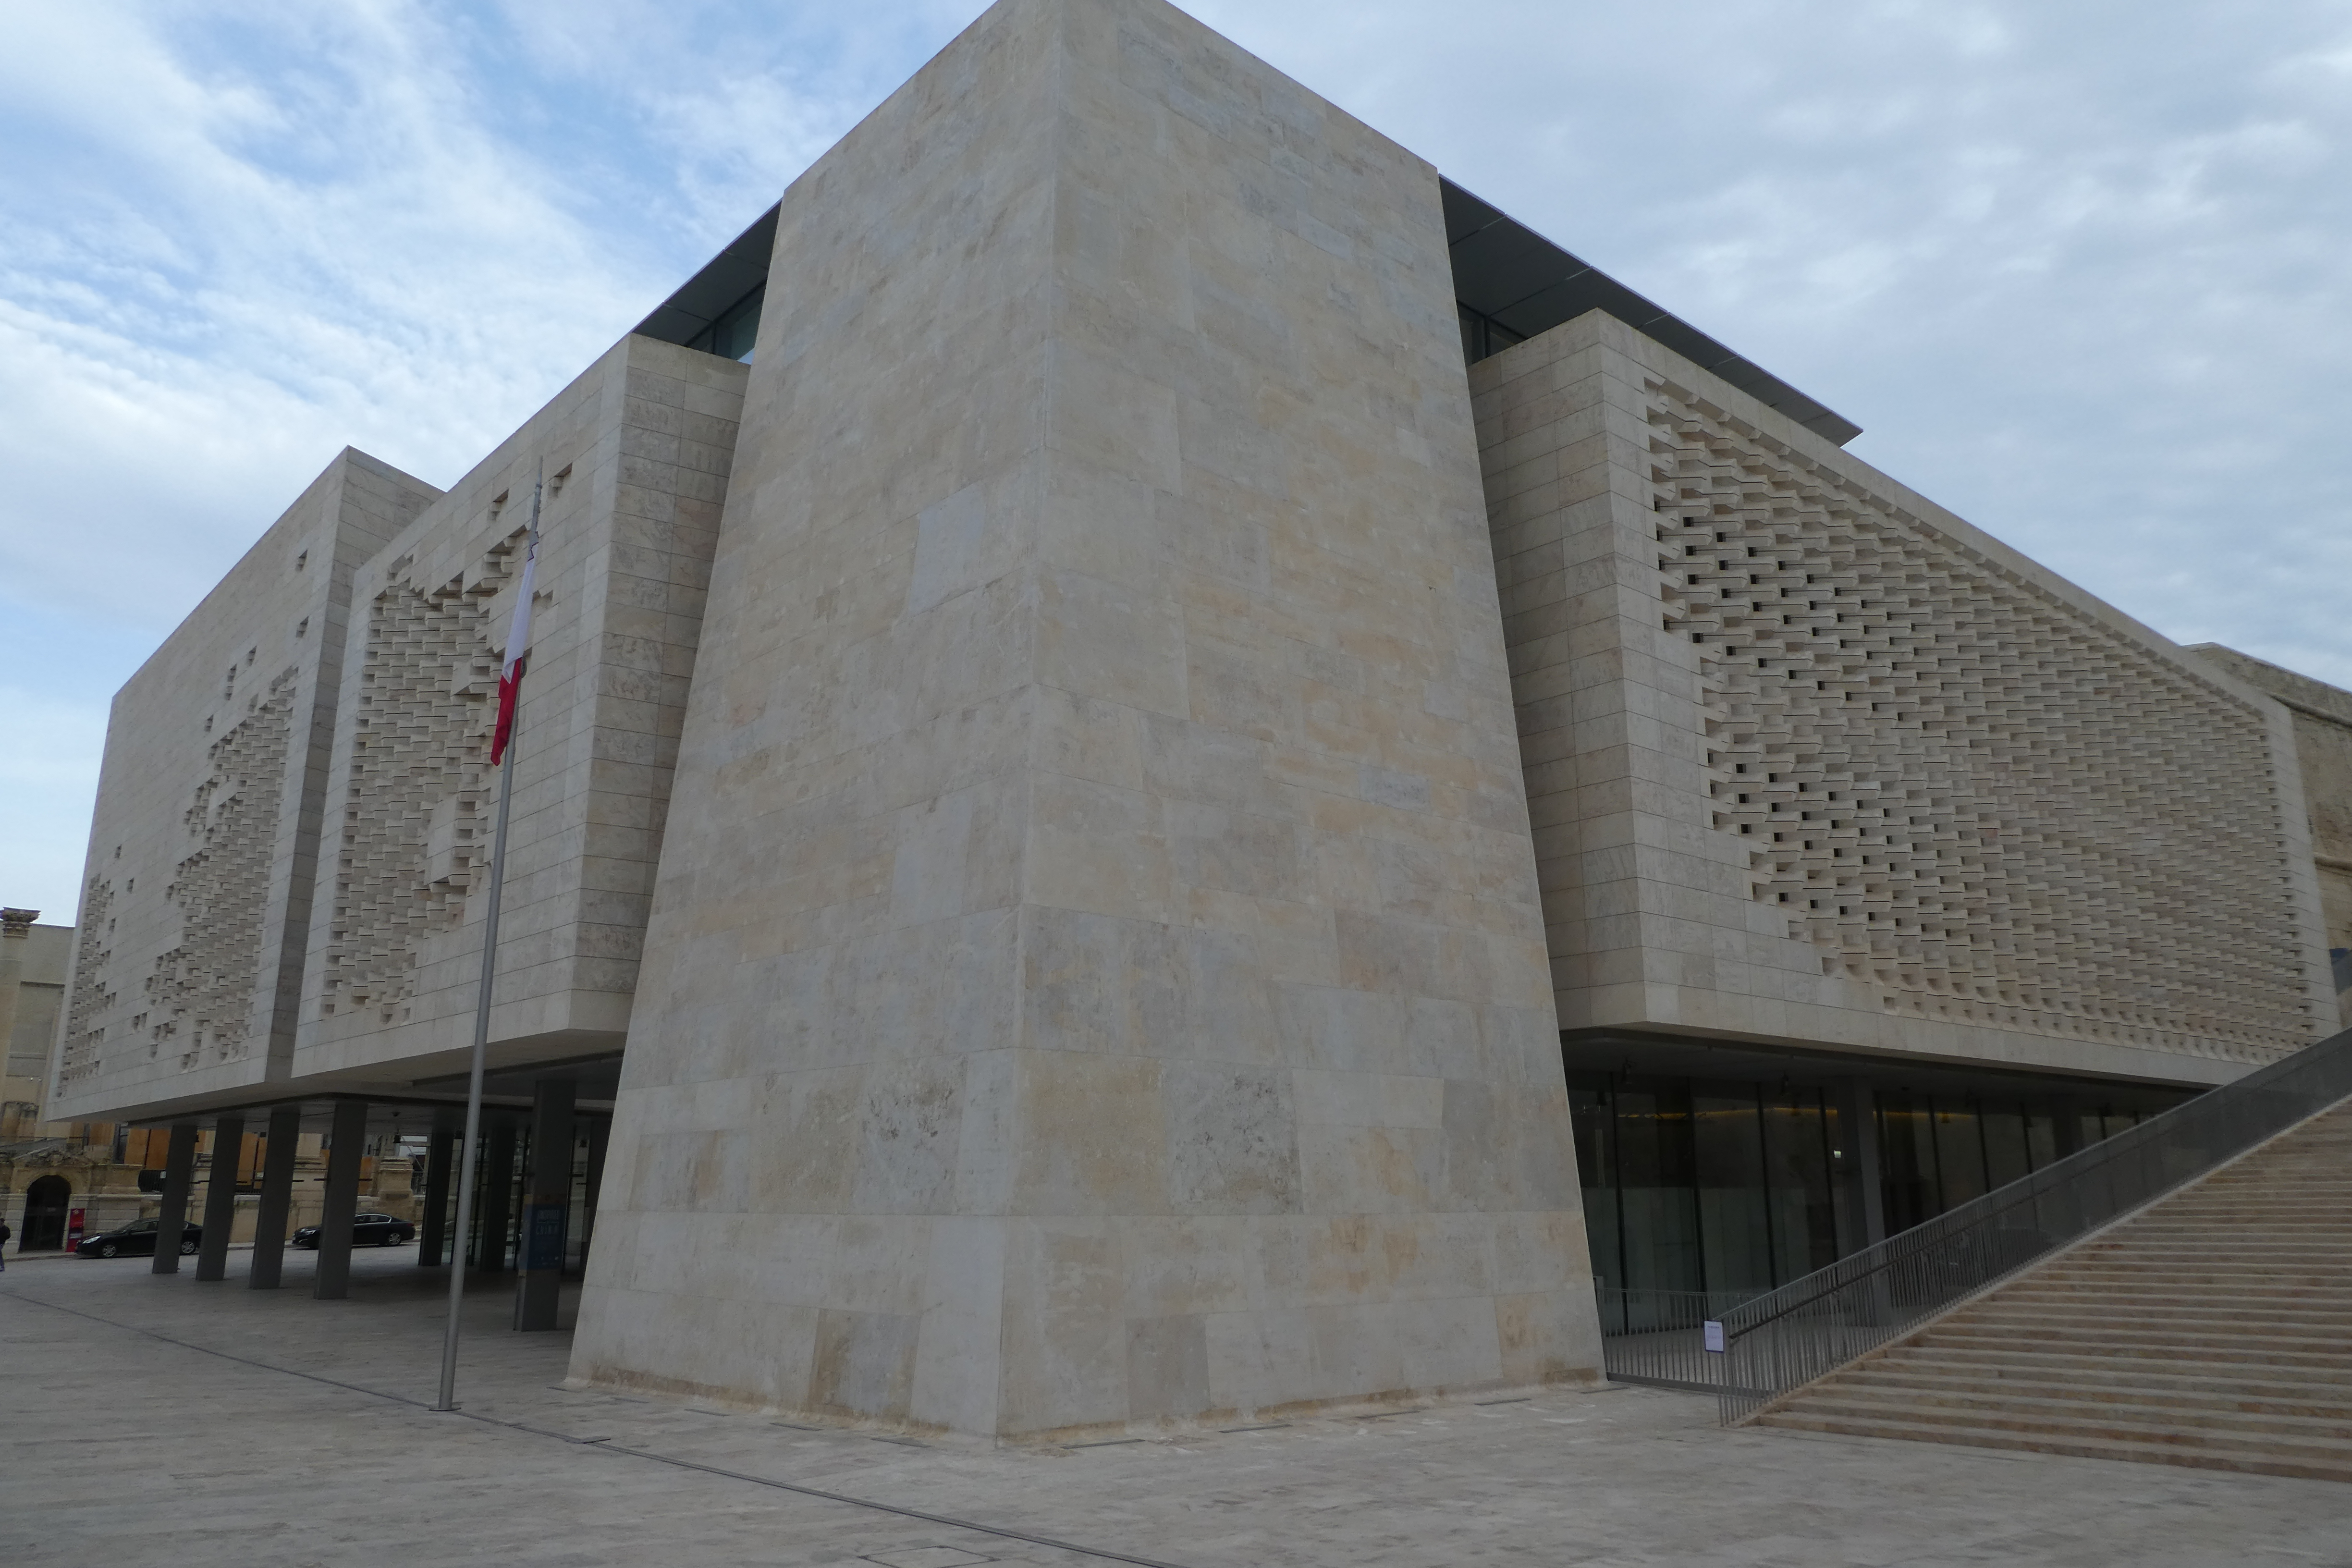 Parliament of Malta (photo credit: duncan c/flickr)